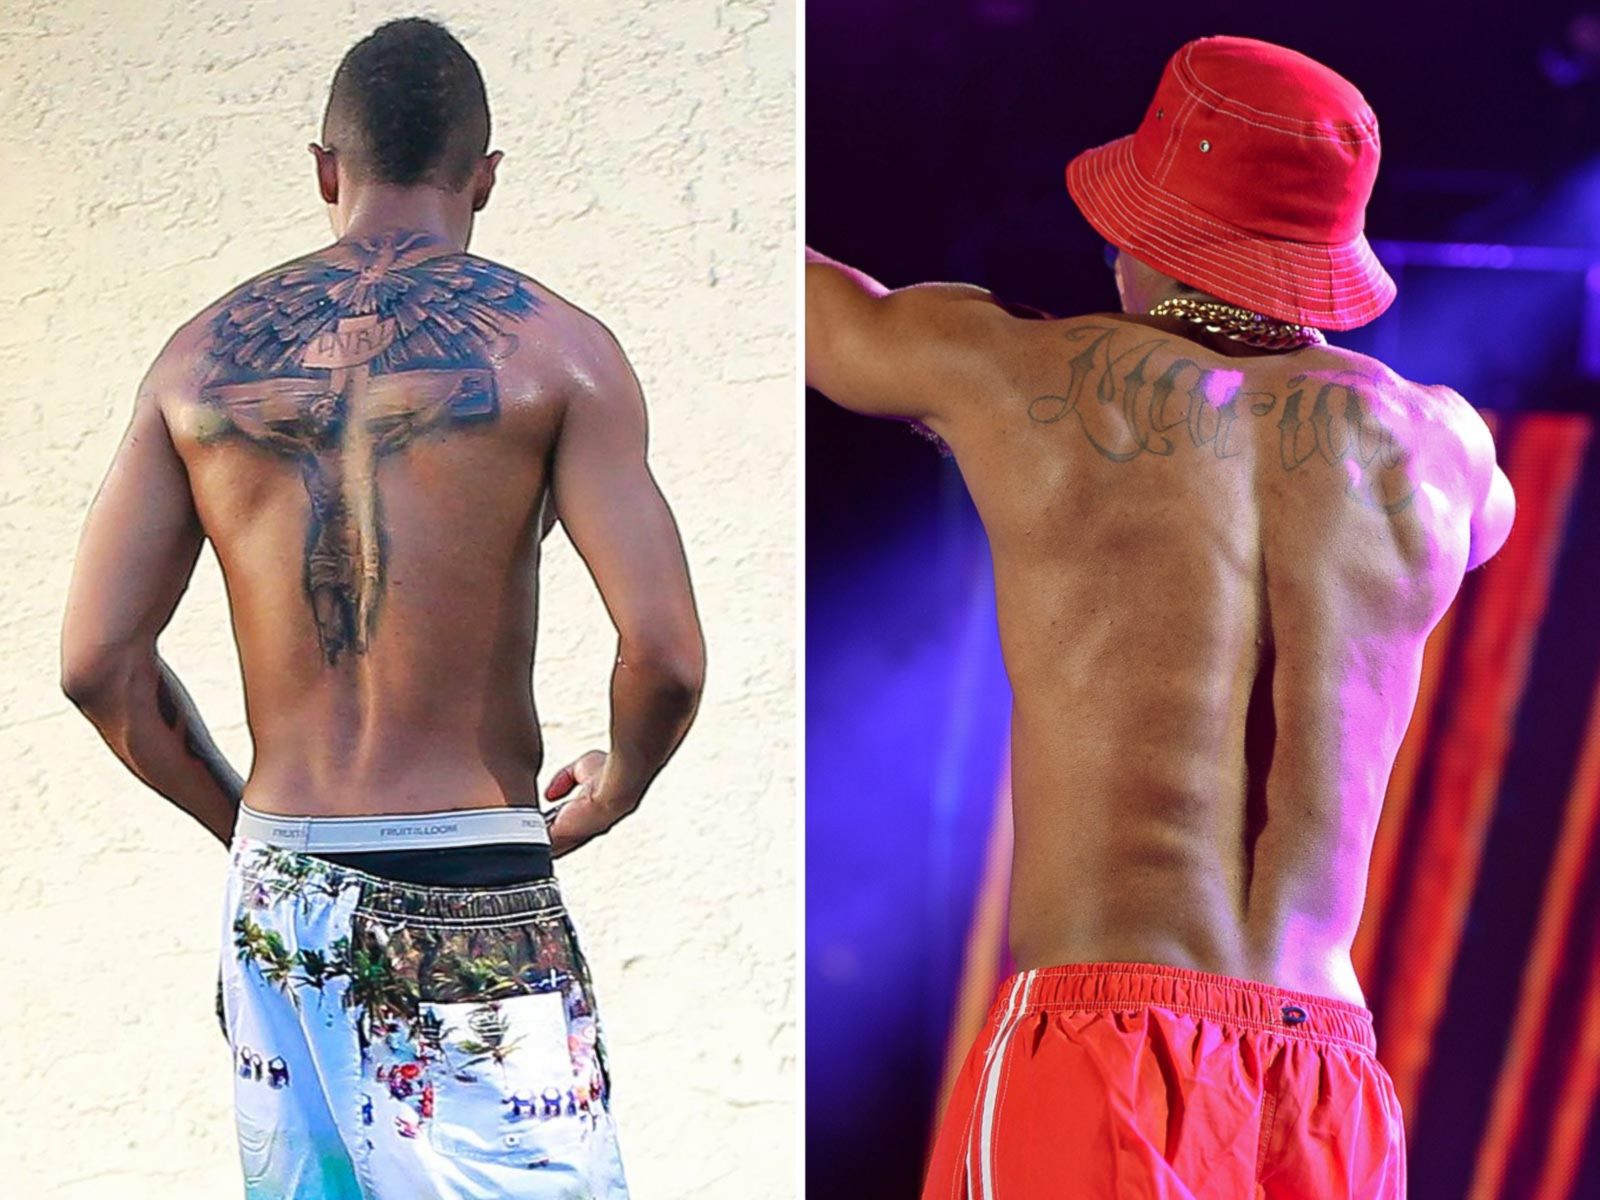 Celebrities reveal their tattoos Photos - ABC News